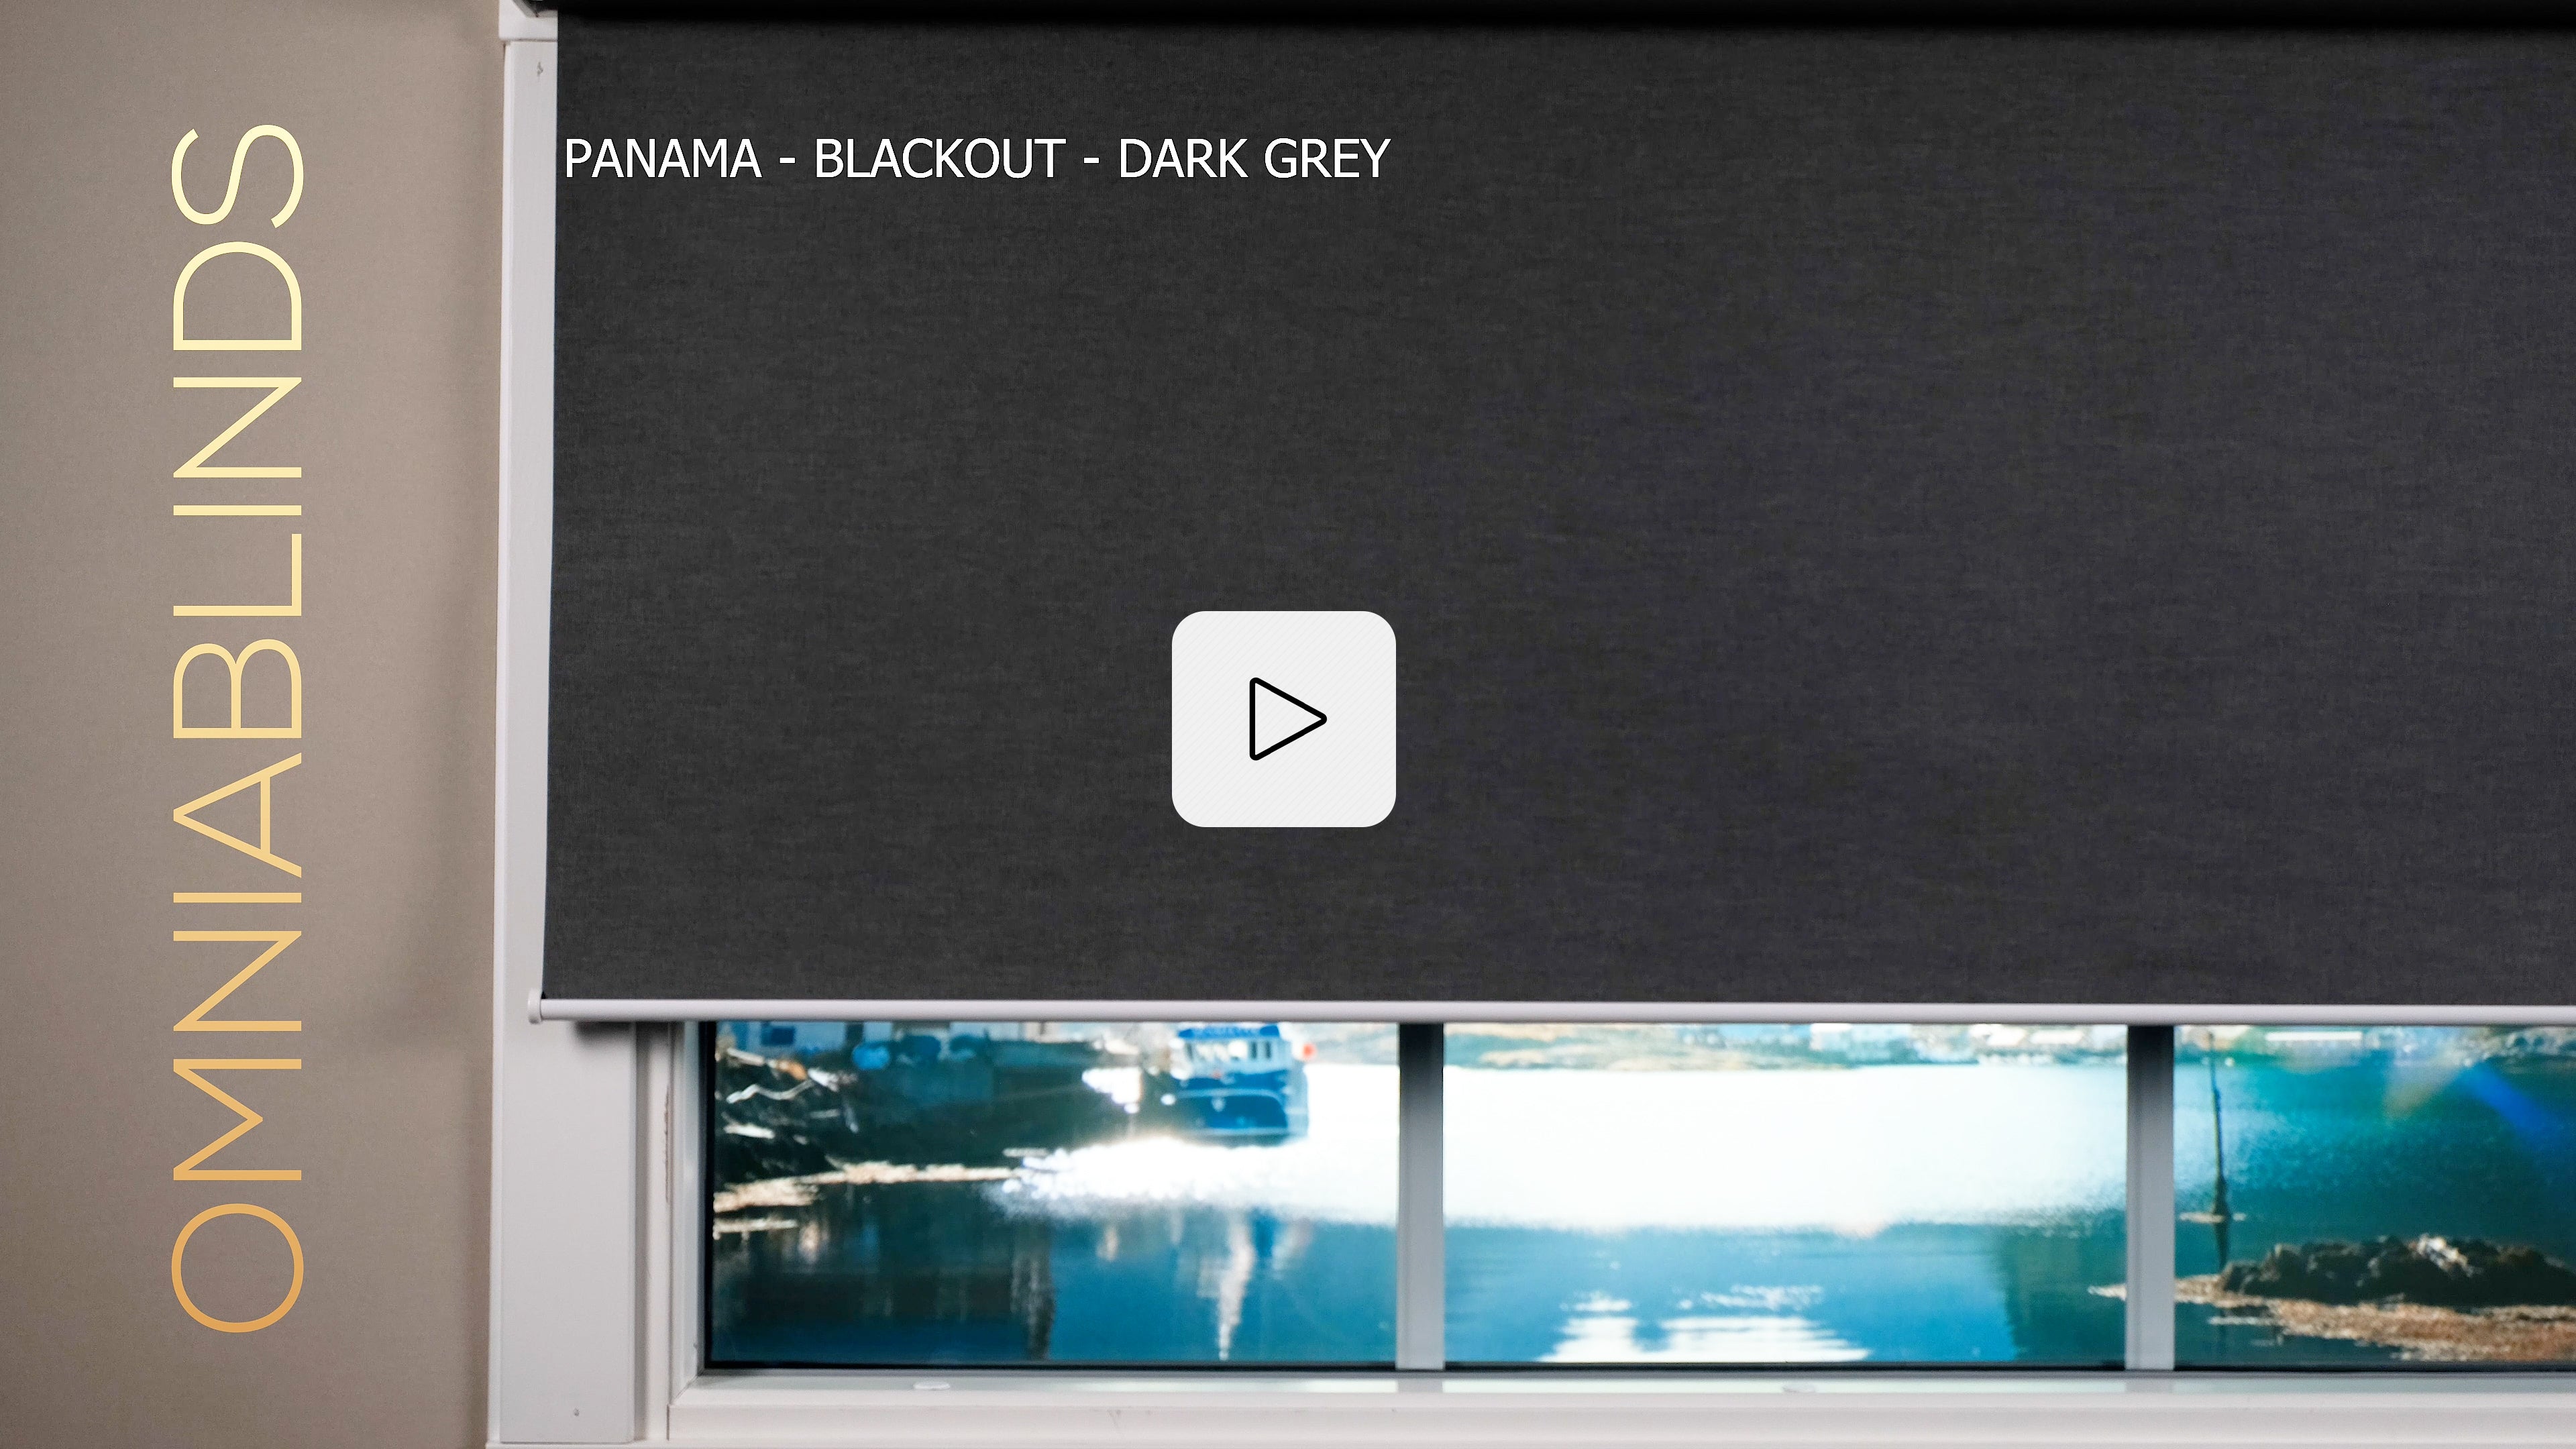 Panama - Blackout - Dark Grey